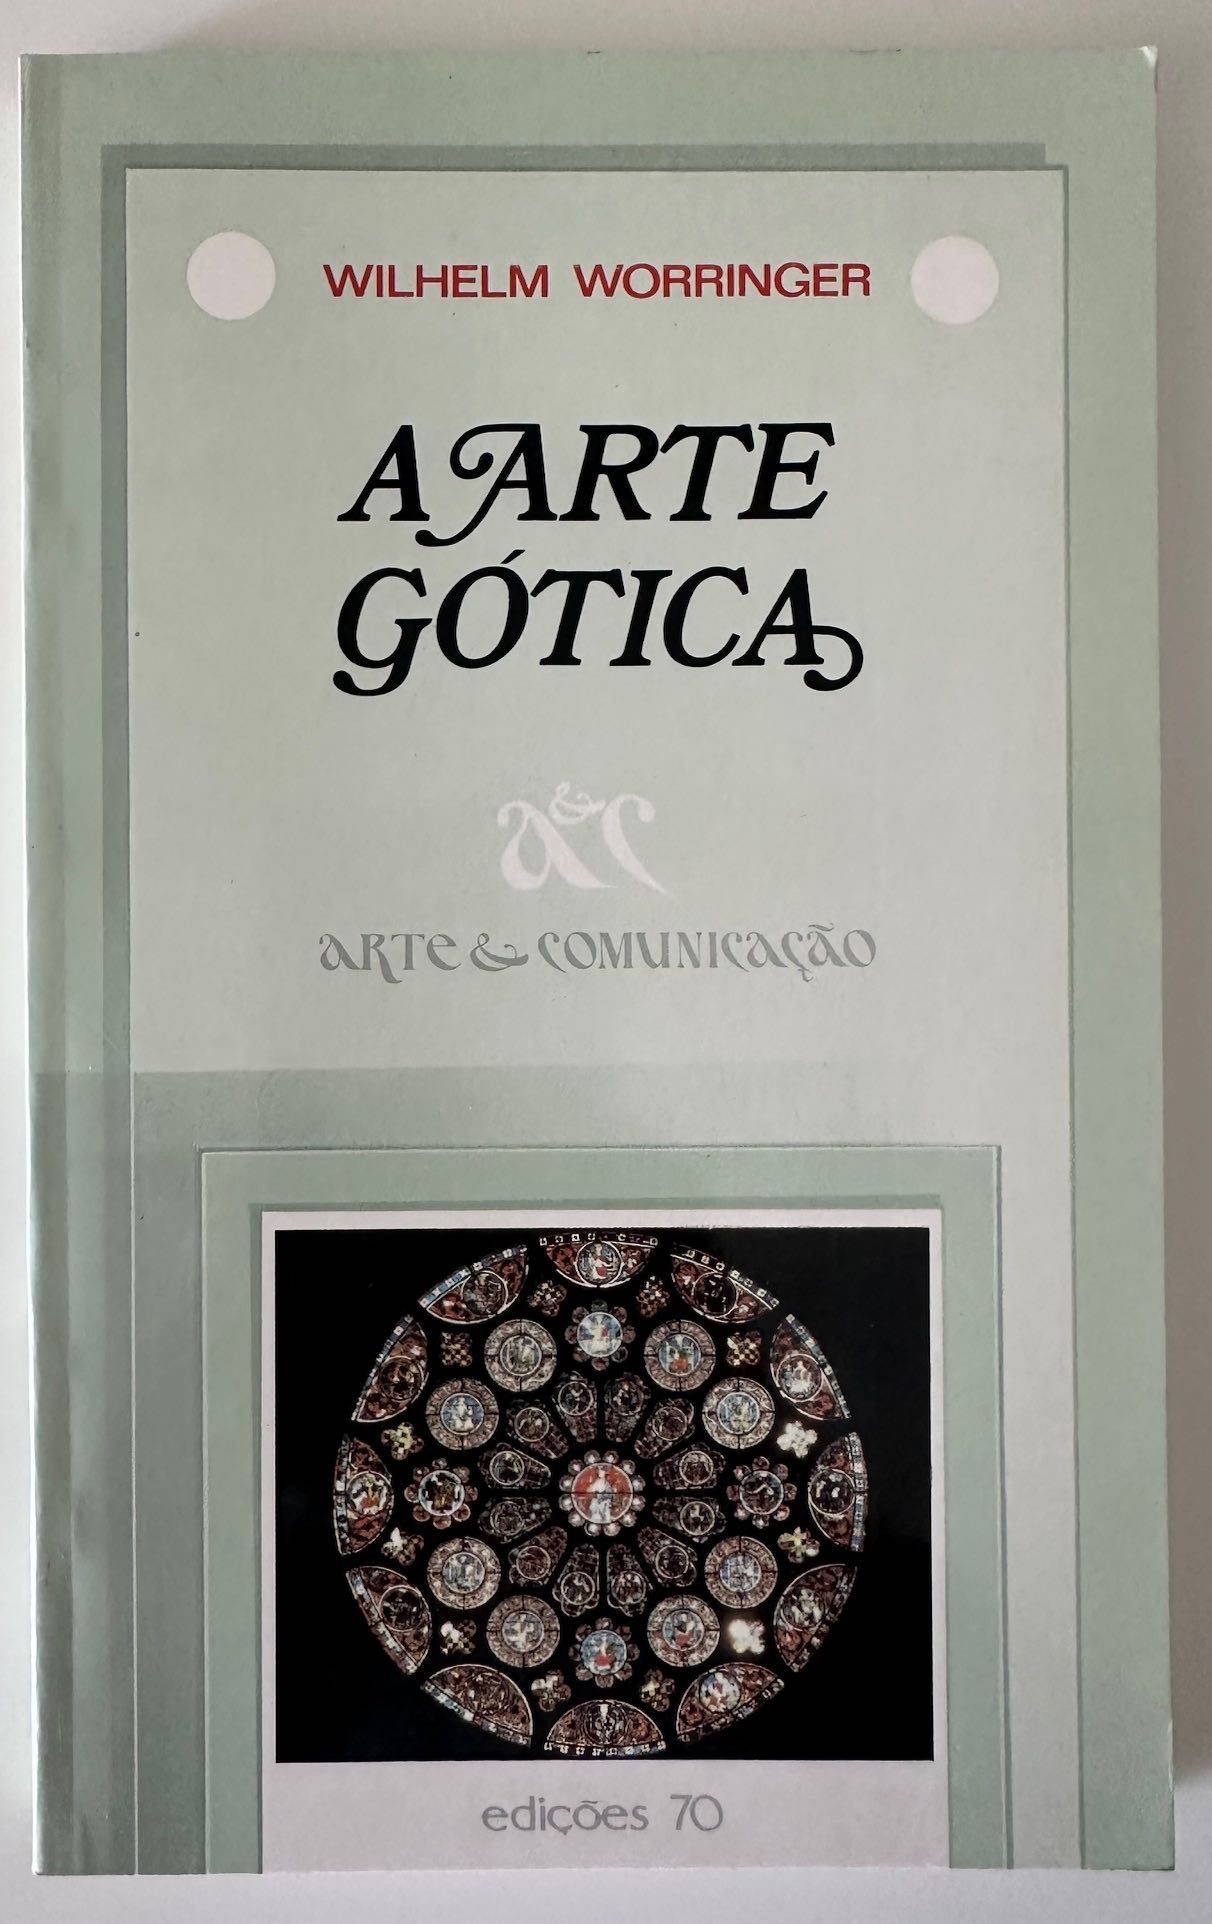 A Arte Gótica - Wilhelm Worringer - 1992